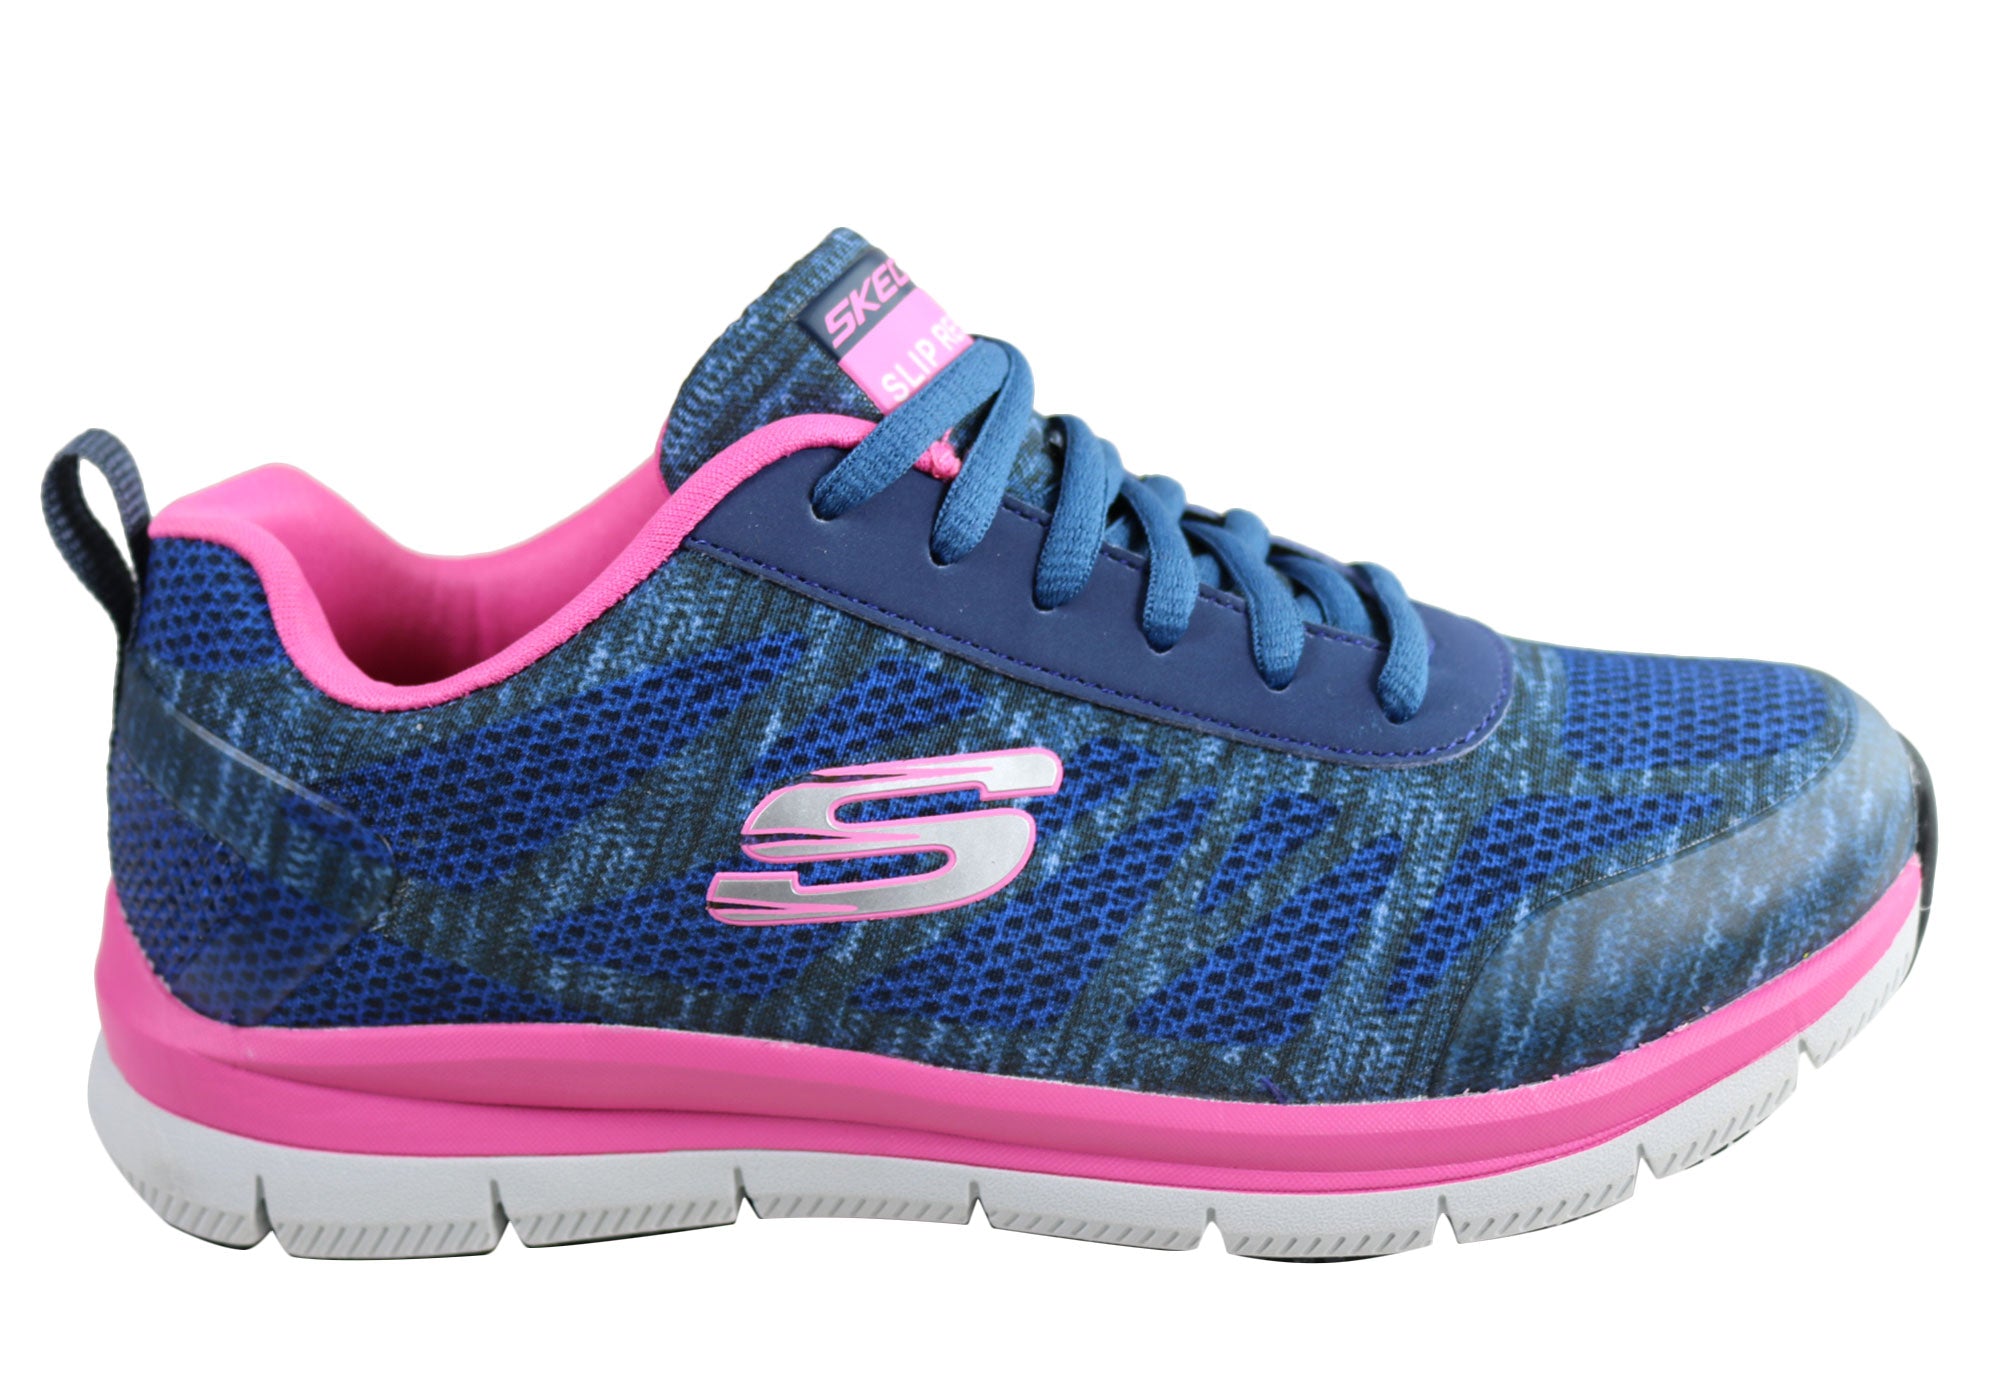 skechers work relaxed fit comfort flex pro hc sr women's water resistant shoes